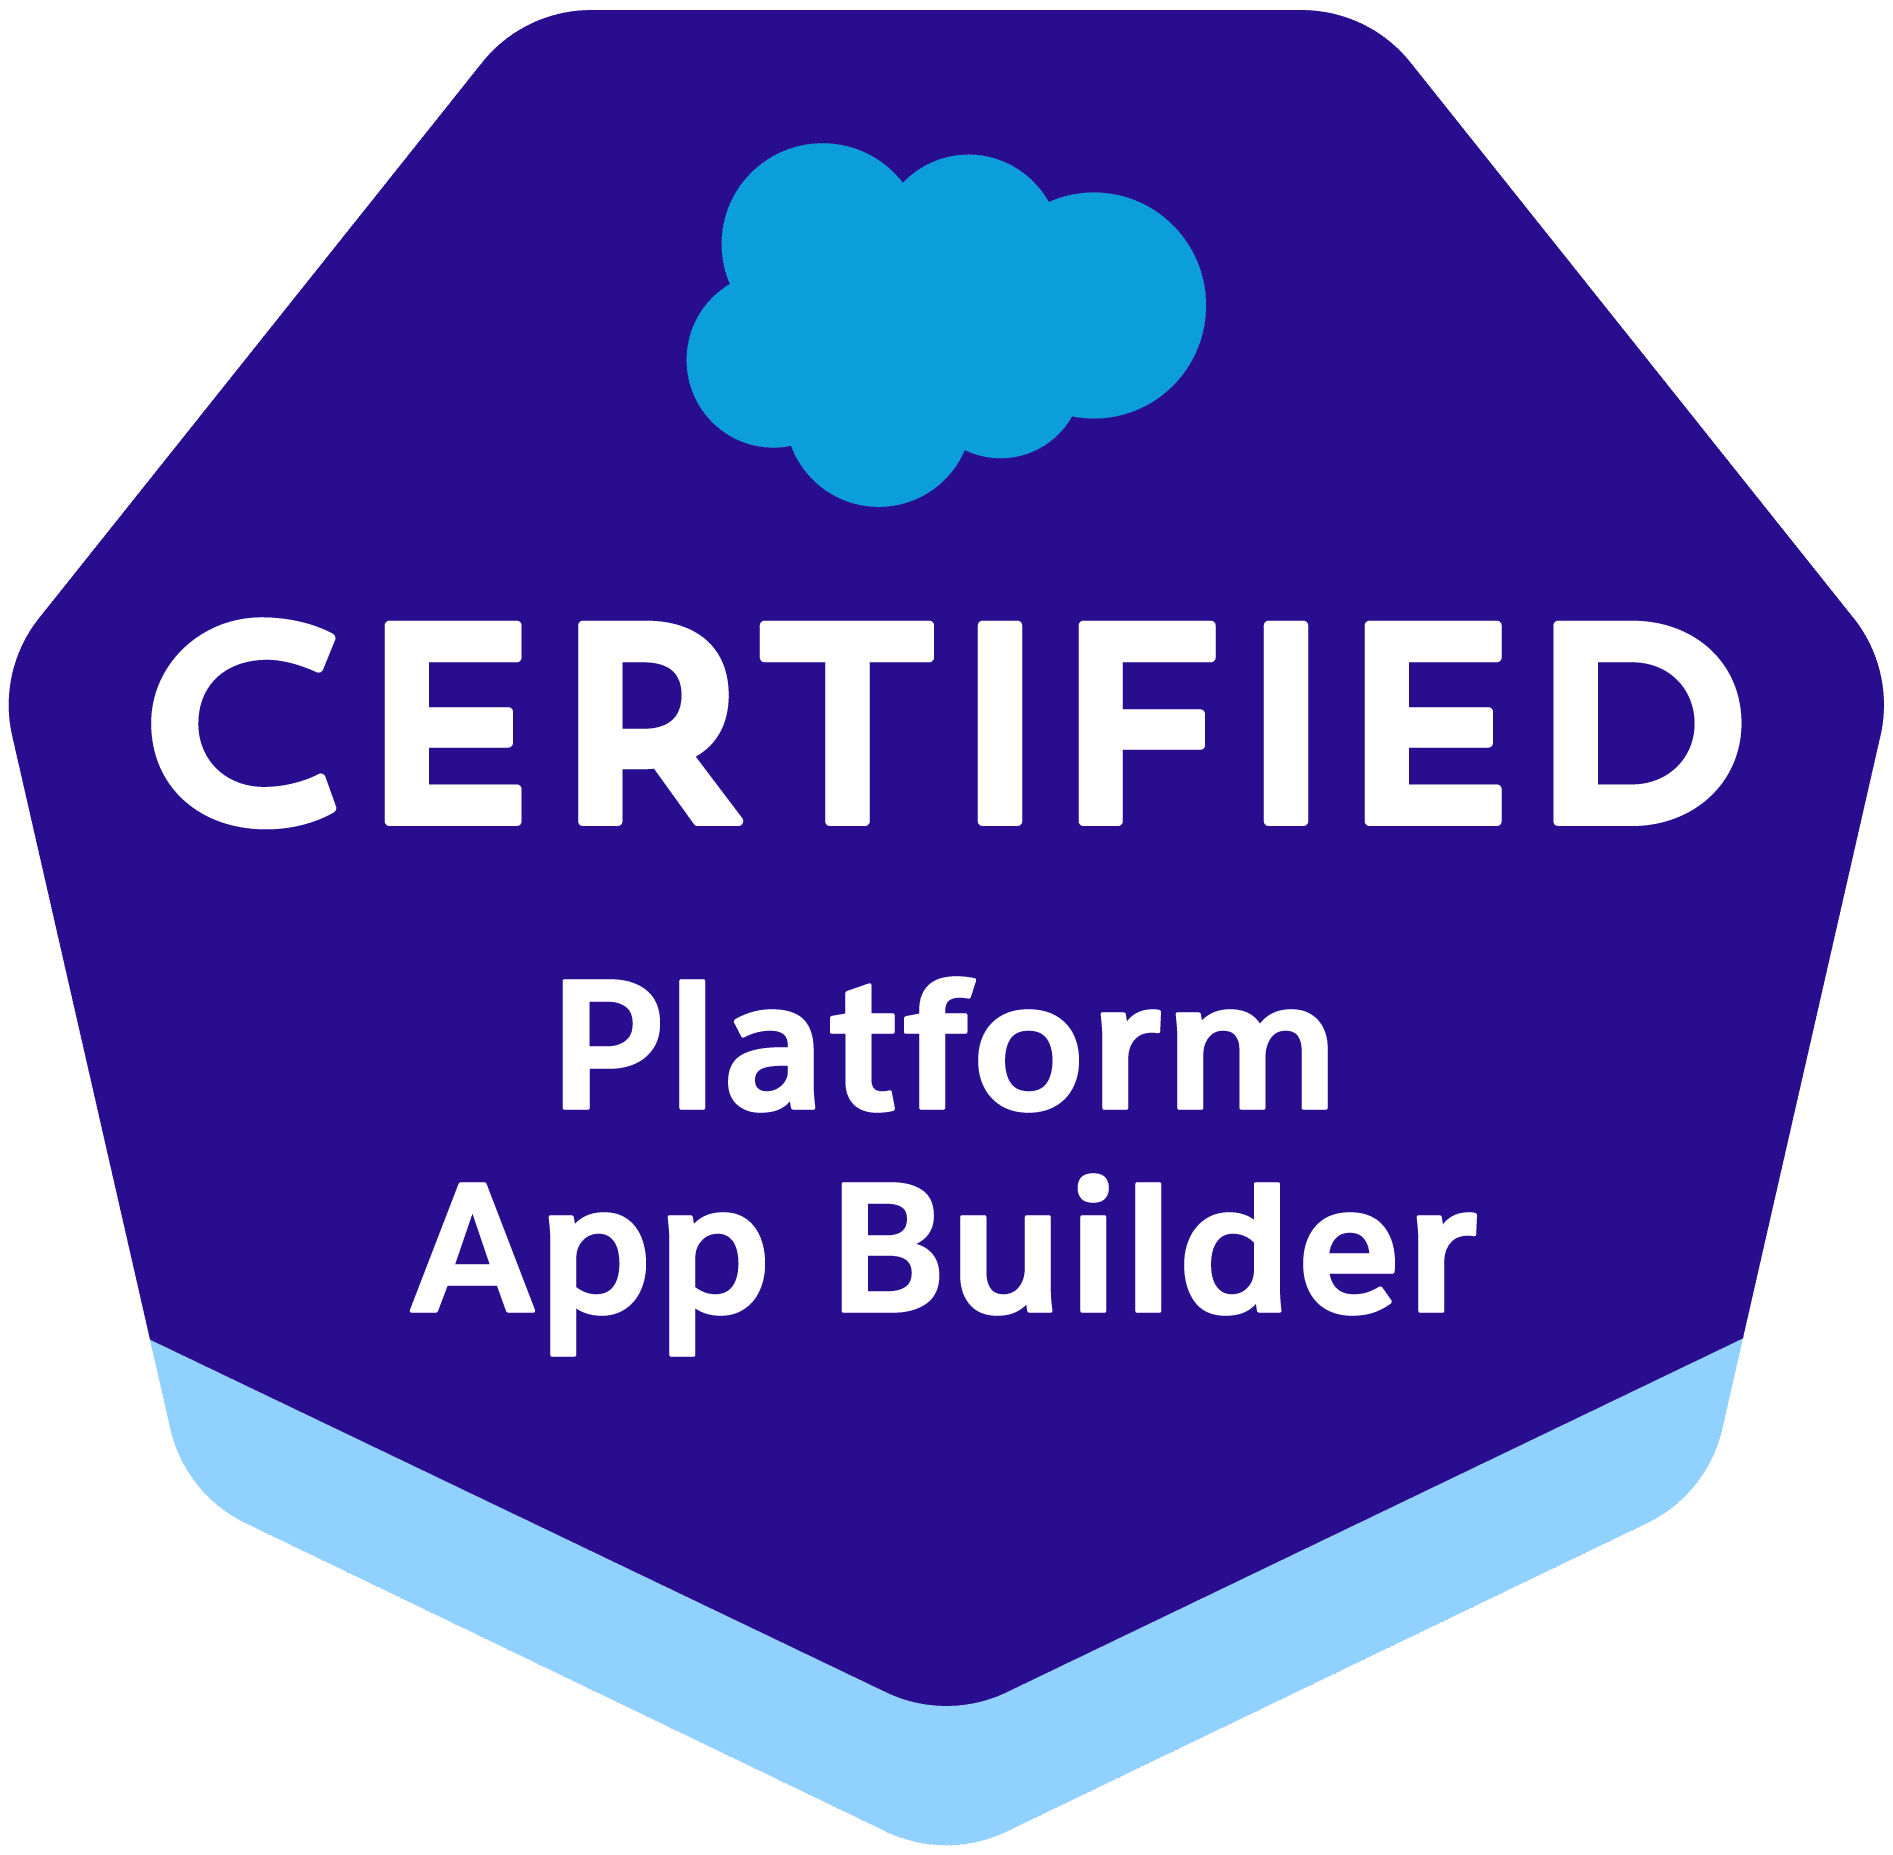 Salesforce platform app builder